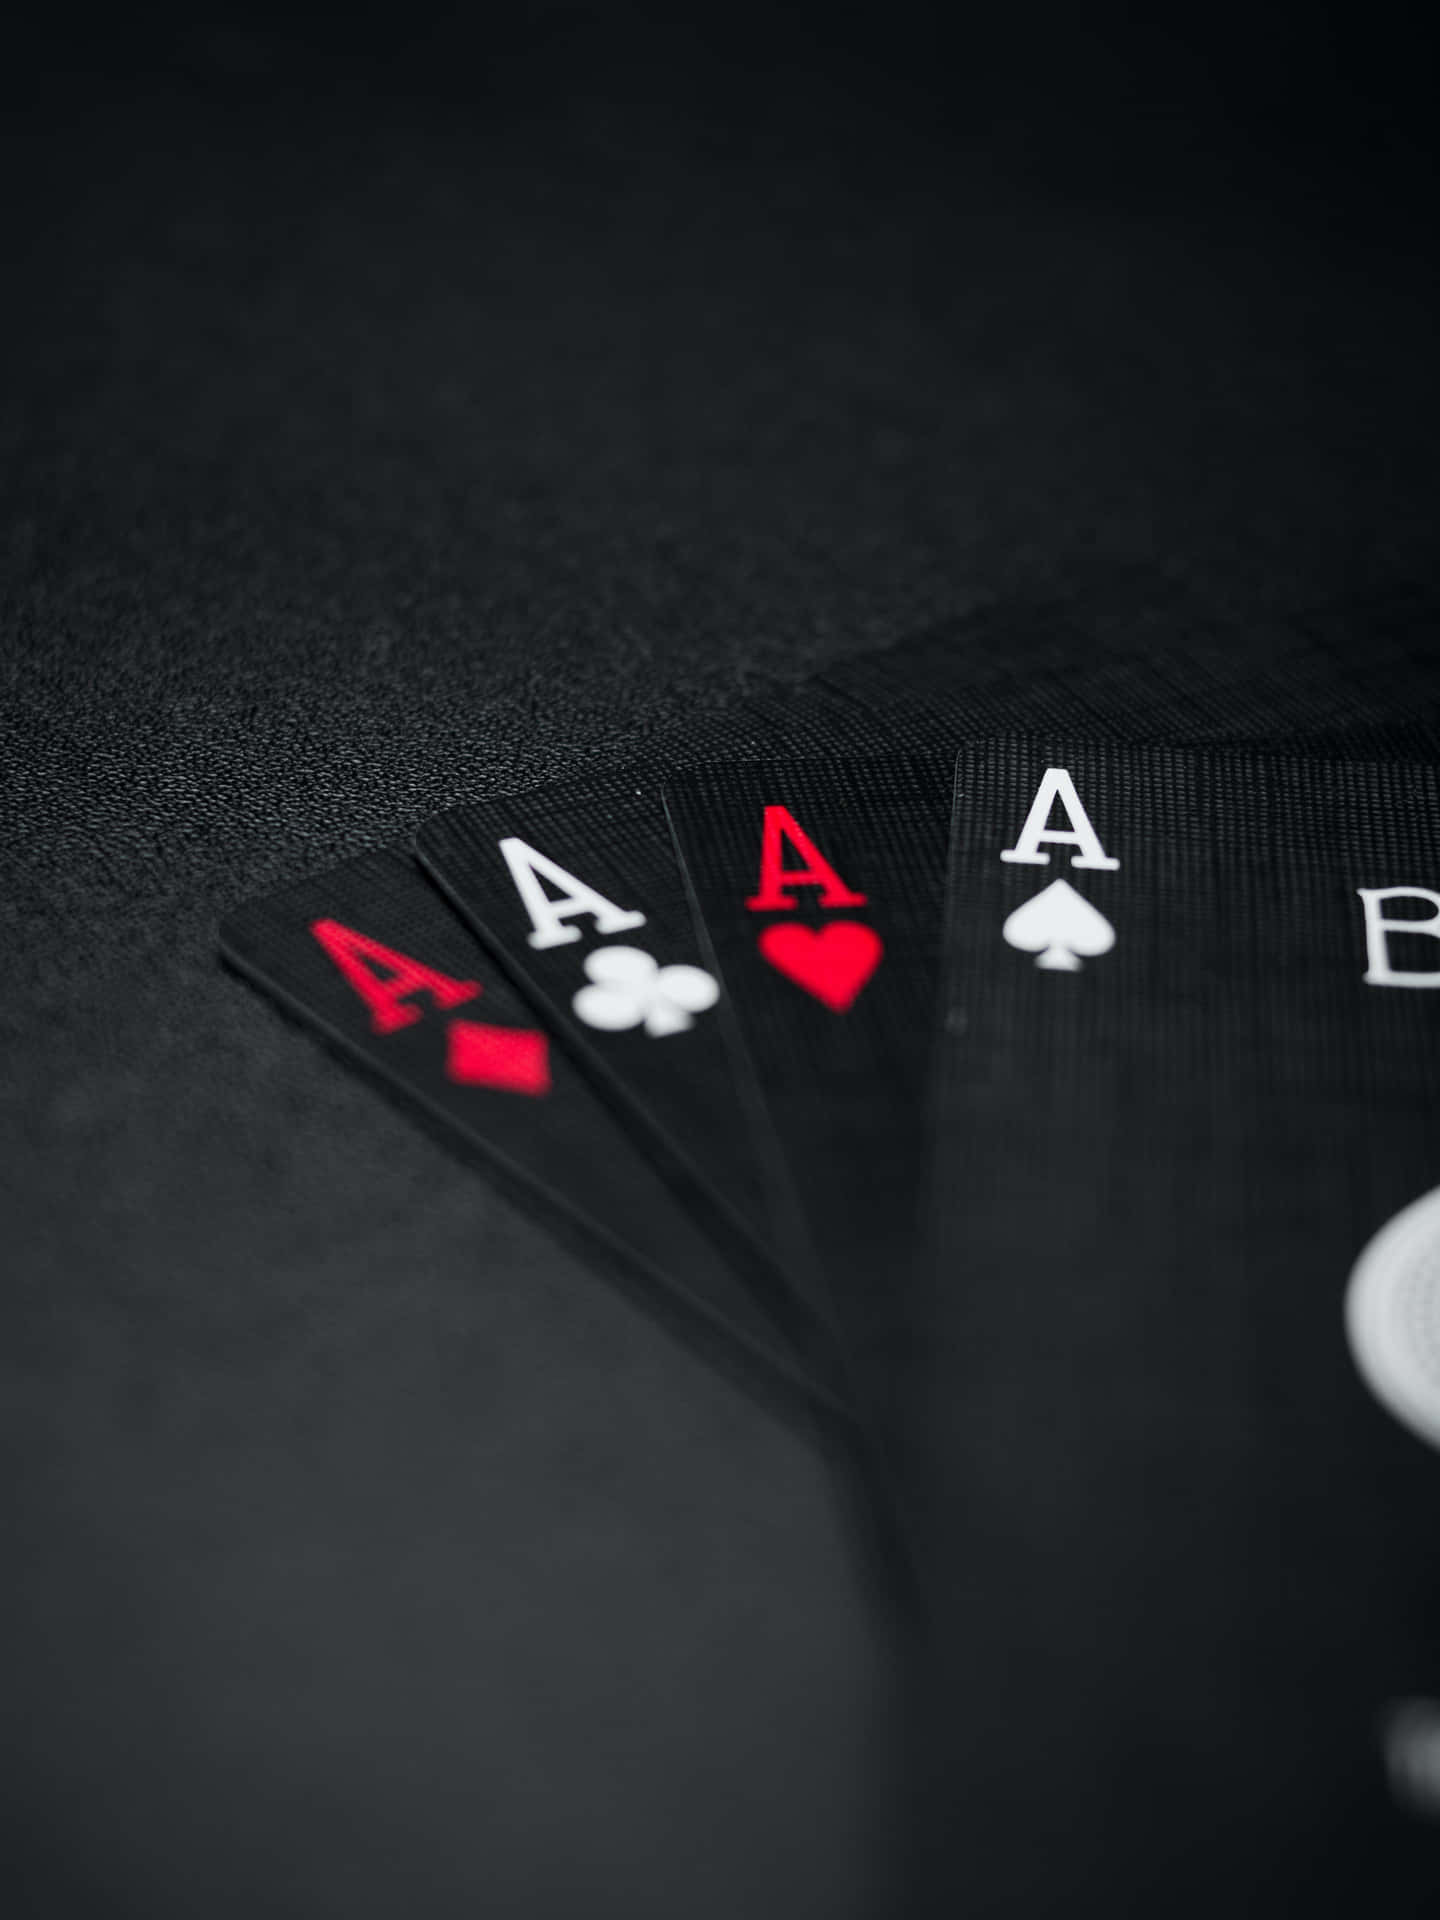 Ace Cards Dark Background Wallpaper